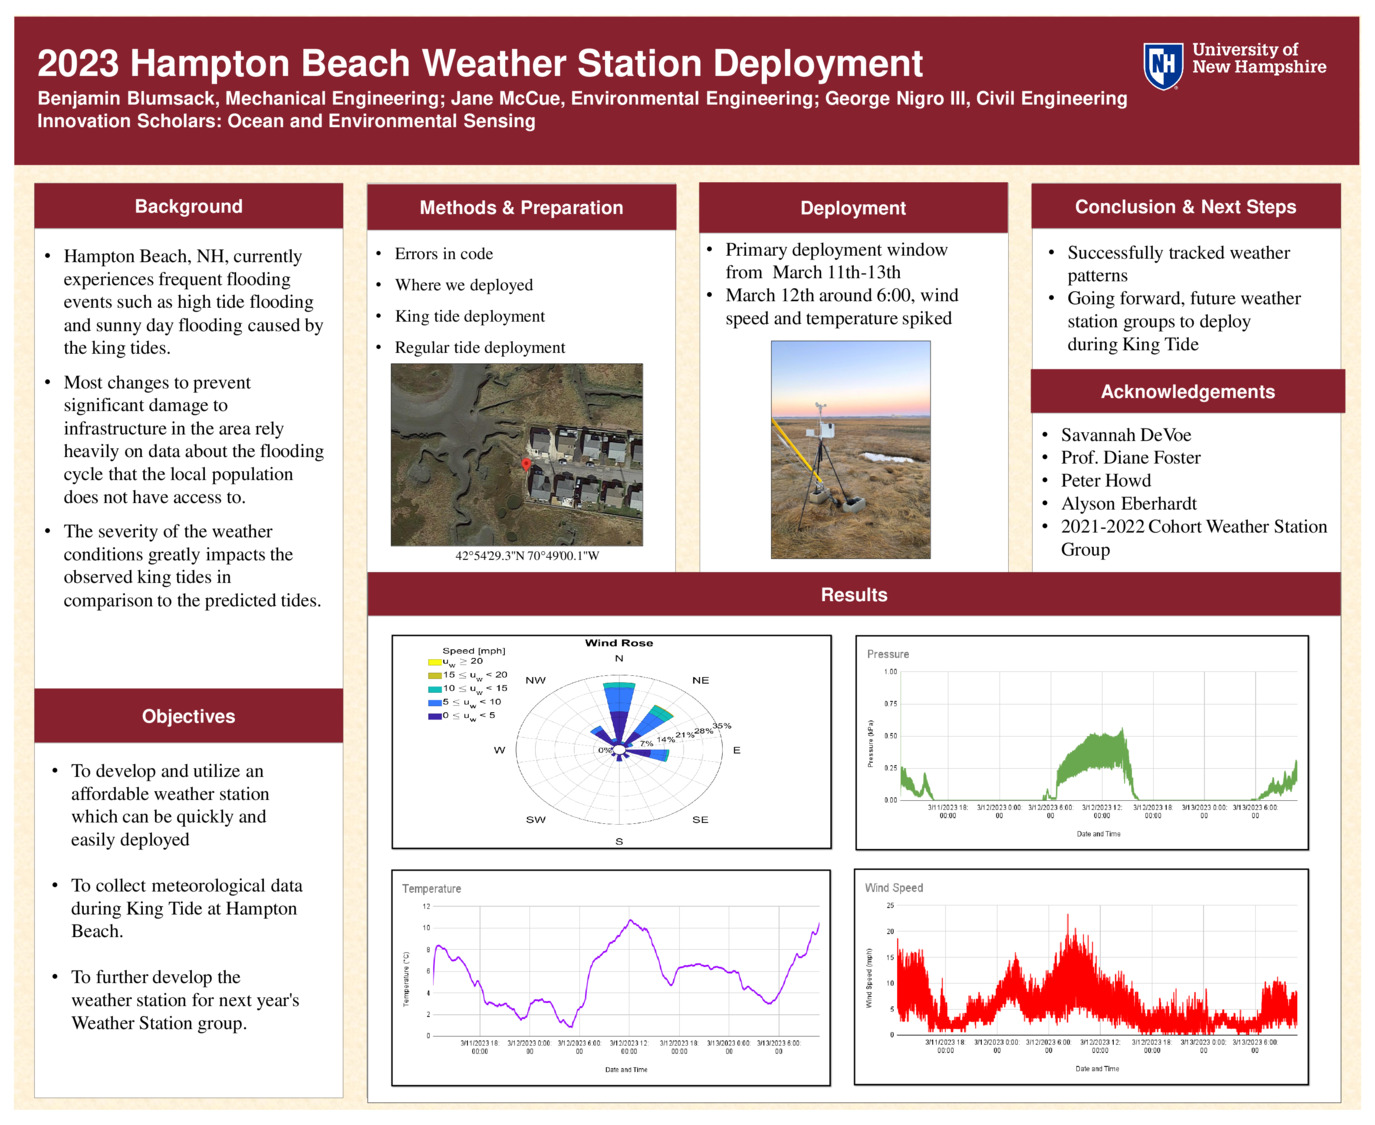 2023 Hampton Beach Weather Station Deployment by gan1017